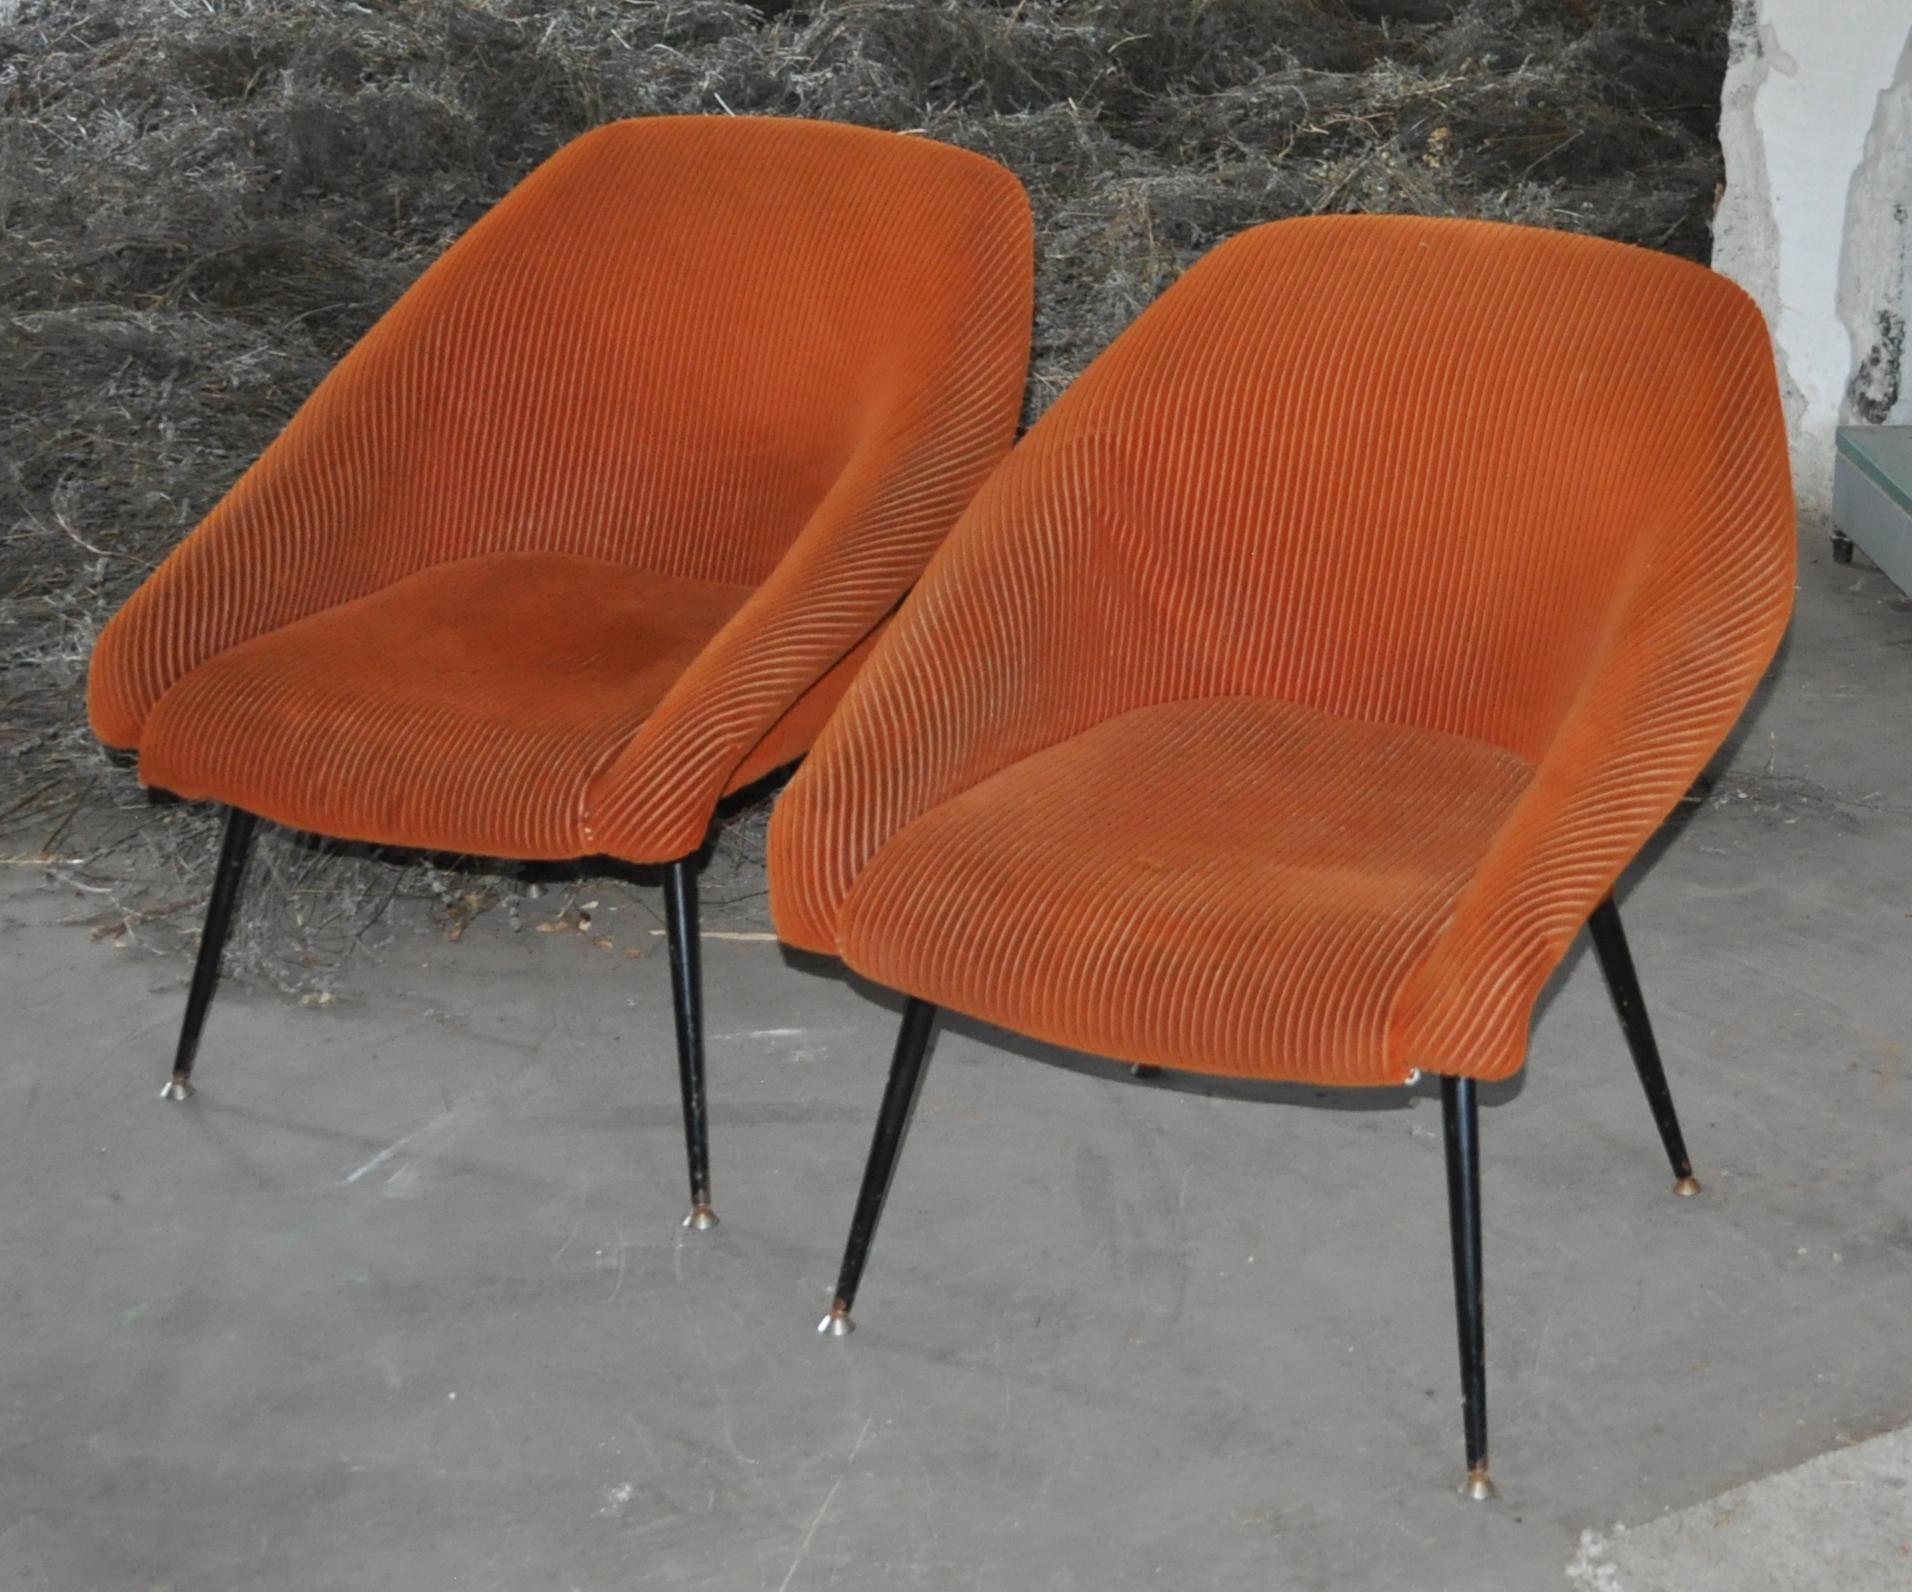 Midcentury Köln armchair with original orange upholstery, 1960s.
from VEB Sitzmöbelwerke Waldheim, 1960s

Size: 57 x 76 x 68.